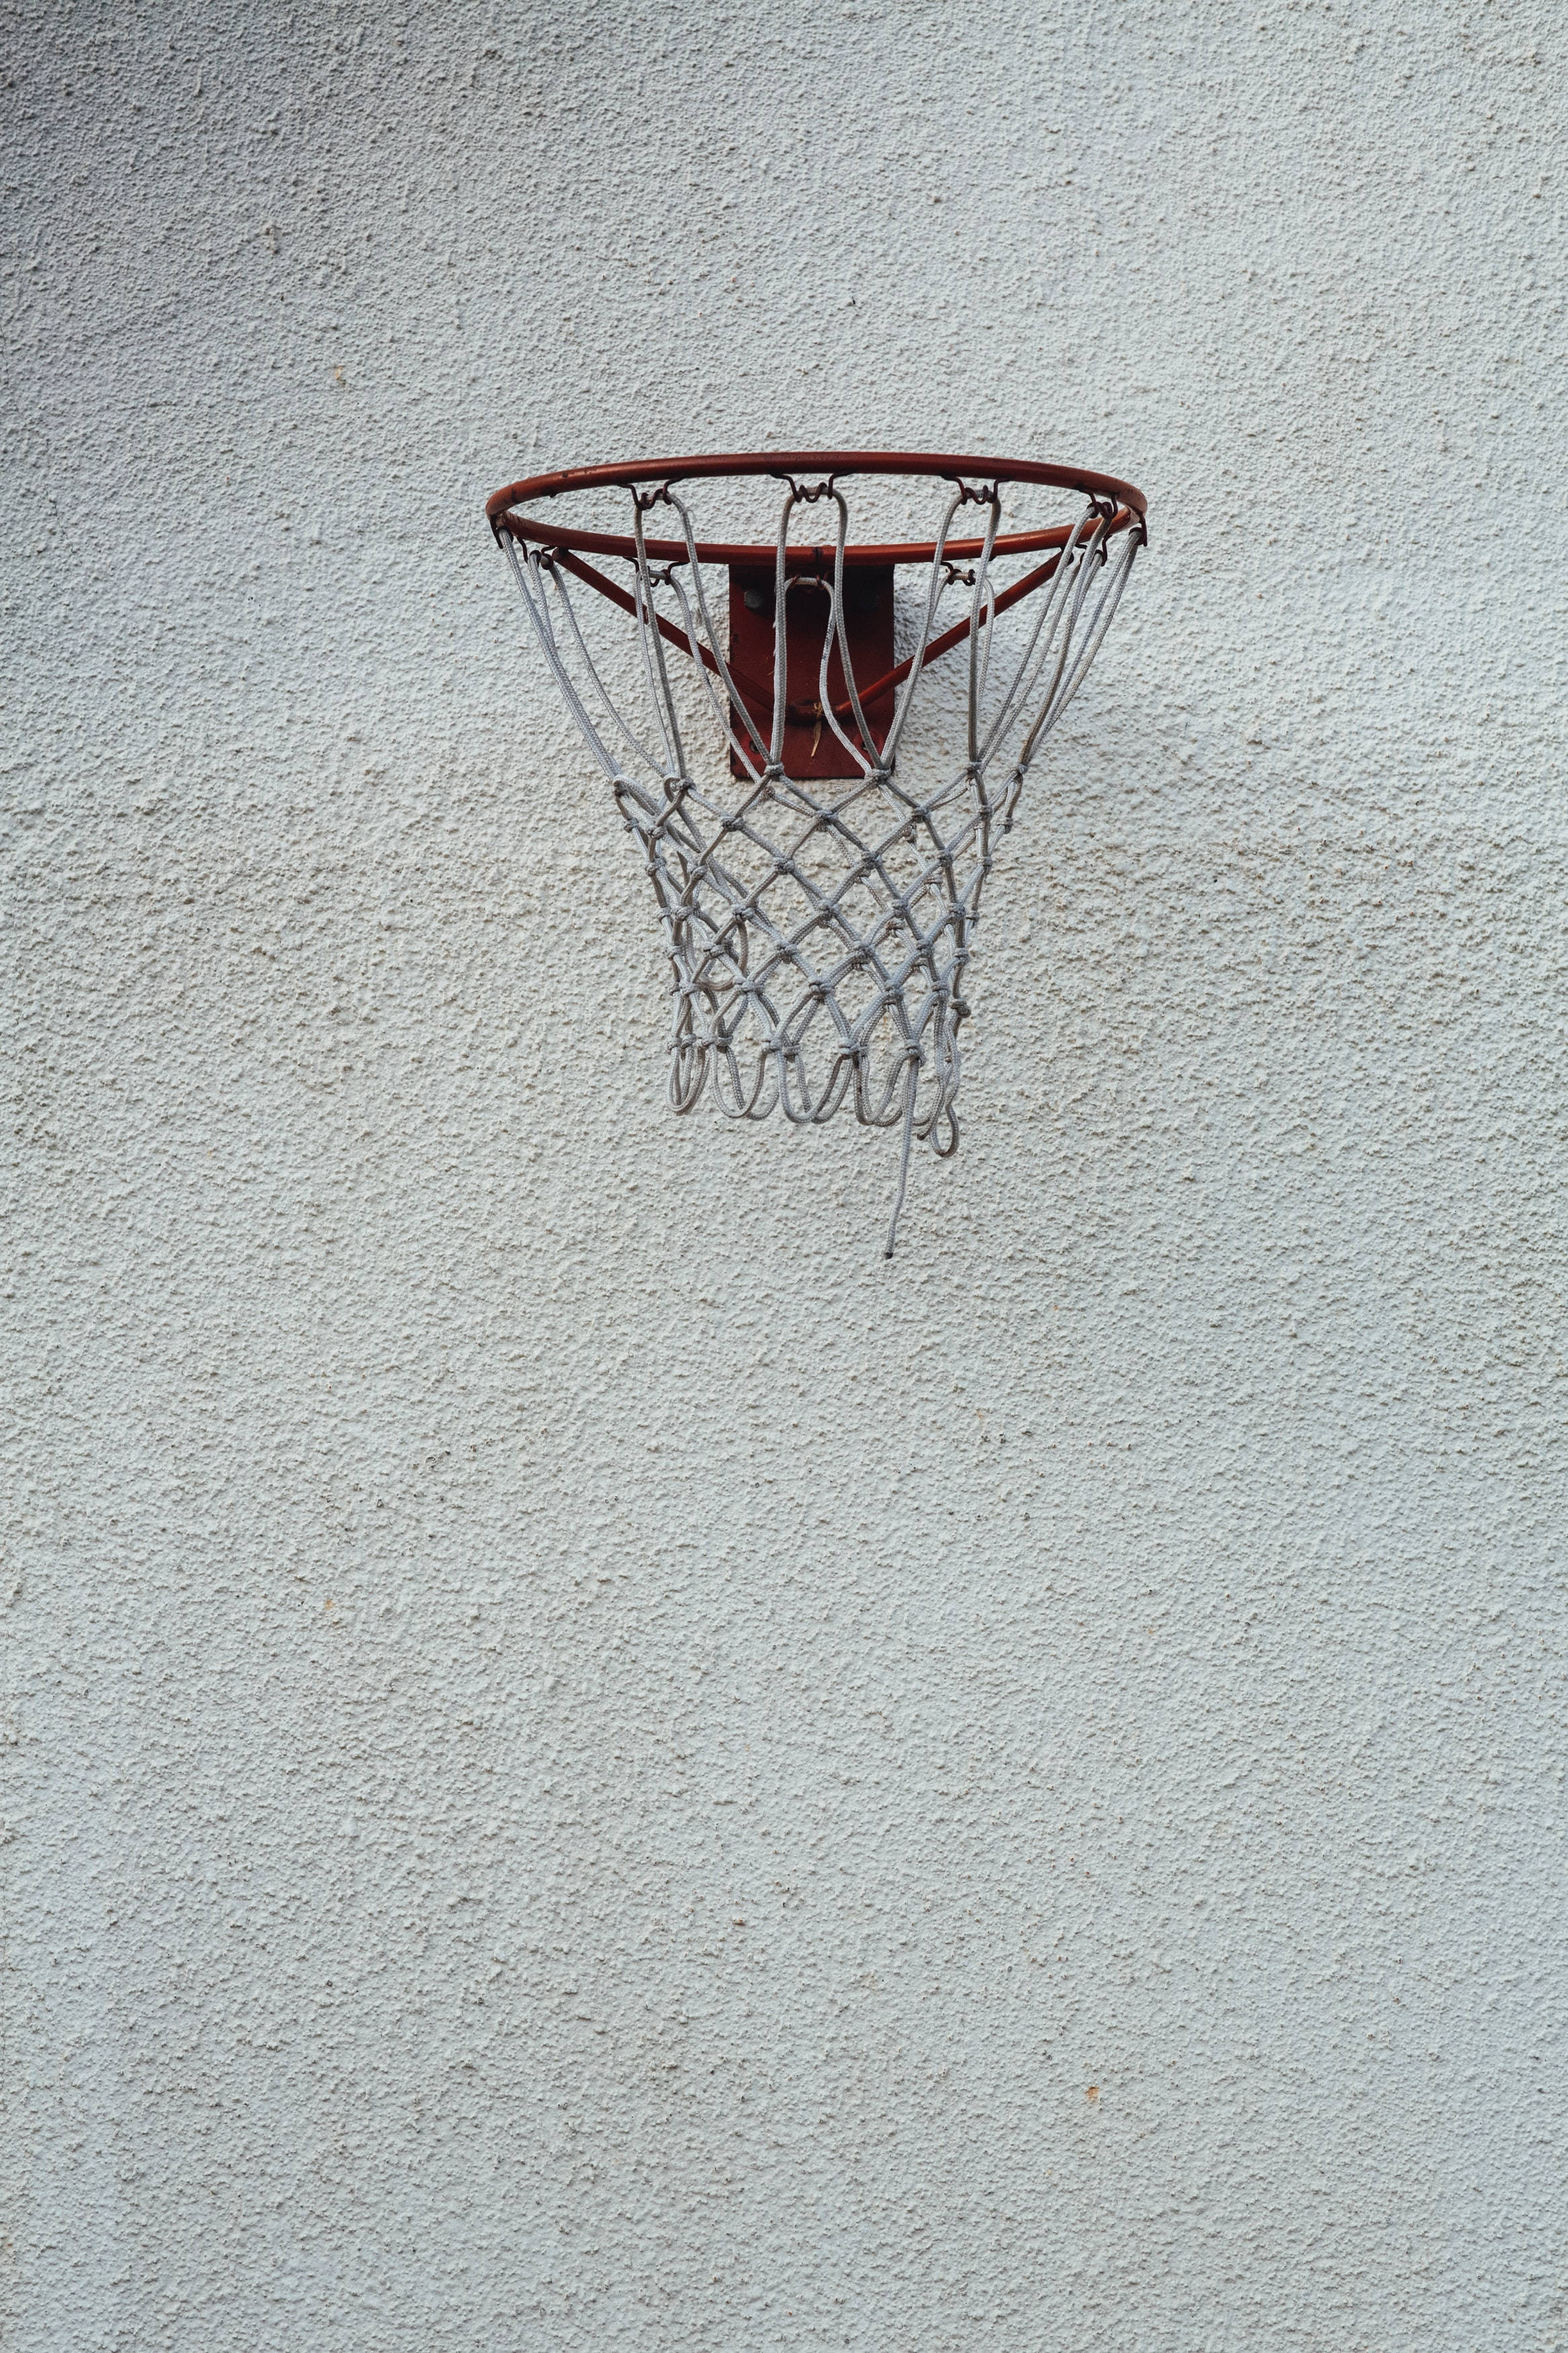 Basketball Hoop Net On White Wall Background